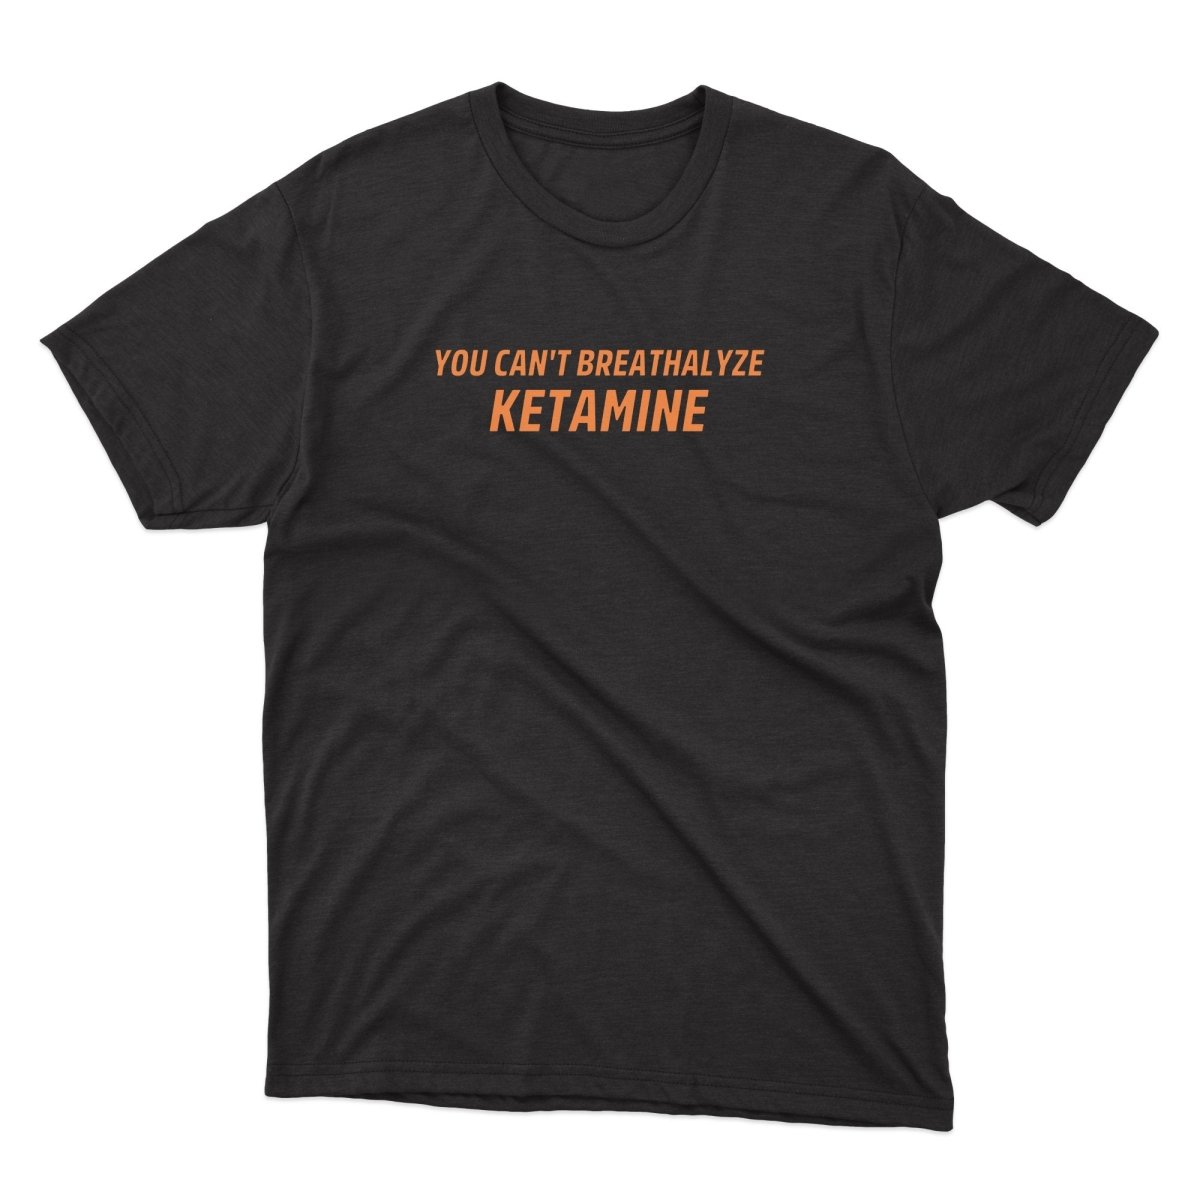 You Can't Breathalyze Ketamine Shirt - stickerbullYou Can't Breathalyze Ketamine ShirtShirtsPrintifystickerbull51457230994174984829BlackSa black t - shirt with the words you can't breathe ketamine